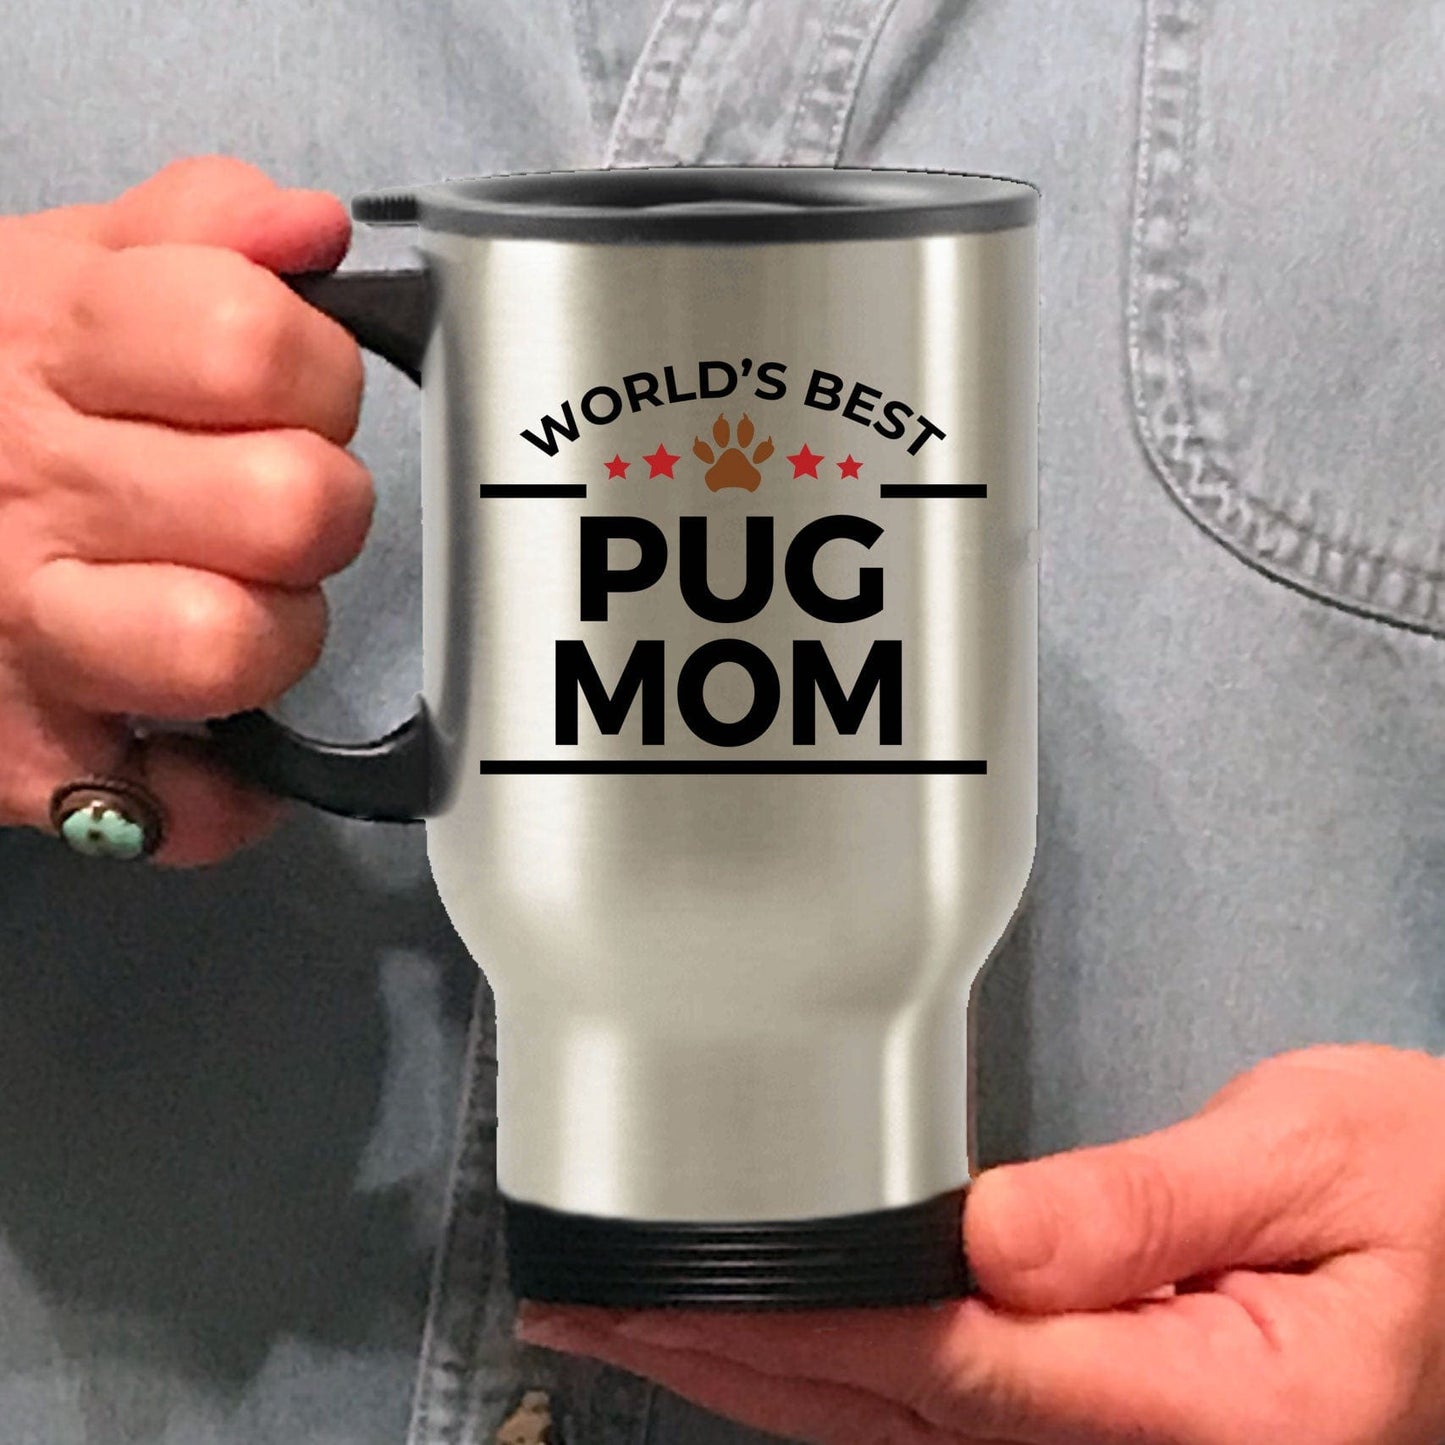 Pug Dog Mom Travel Coffee Mug